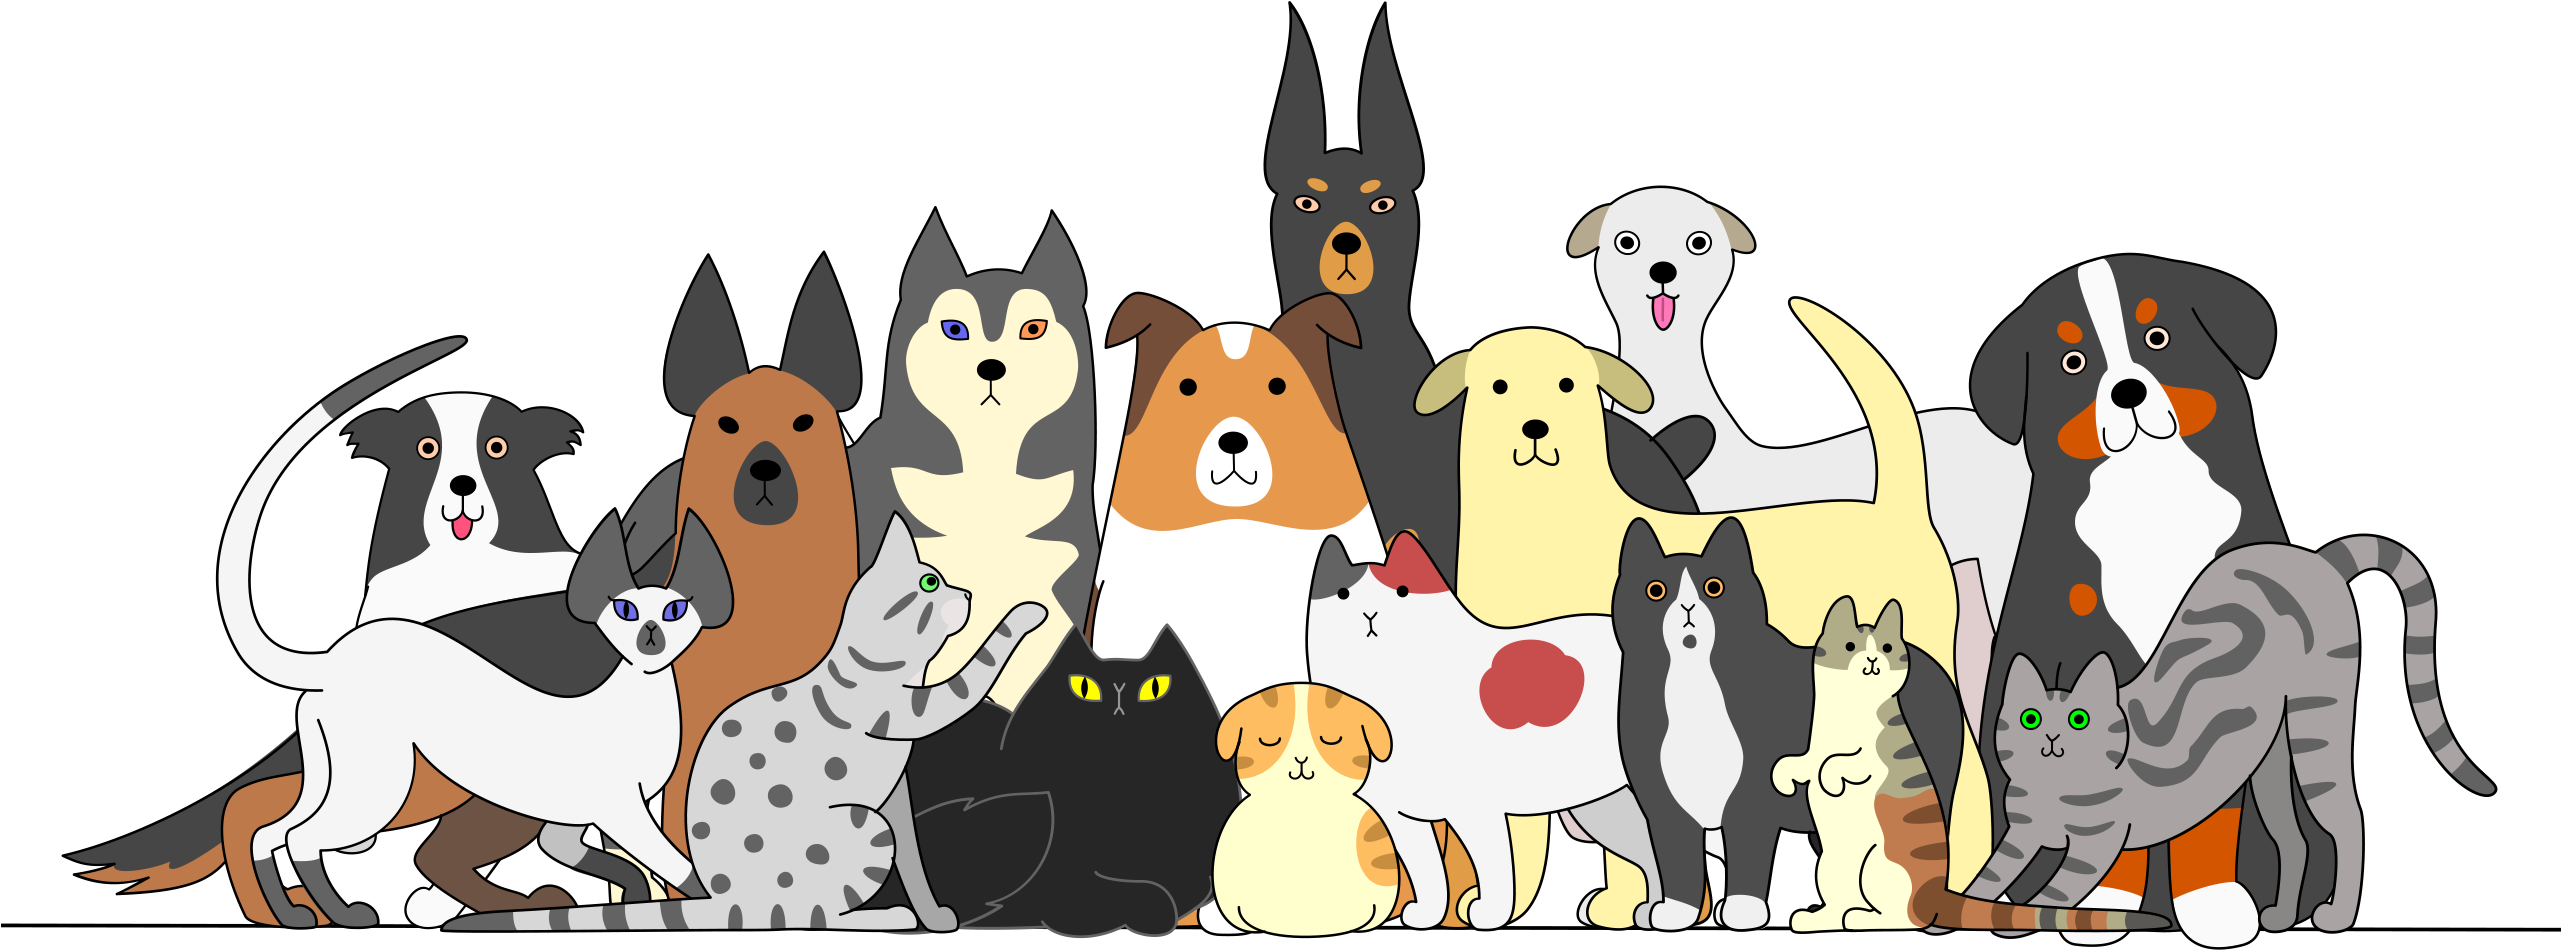 Dog Cartoons - Dog Walking - Group Of Dogs Vector (2560x1400)